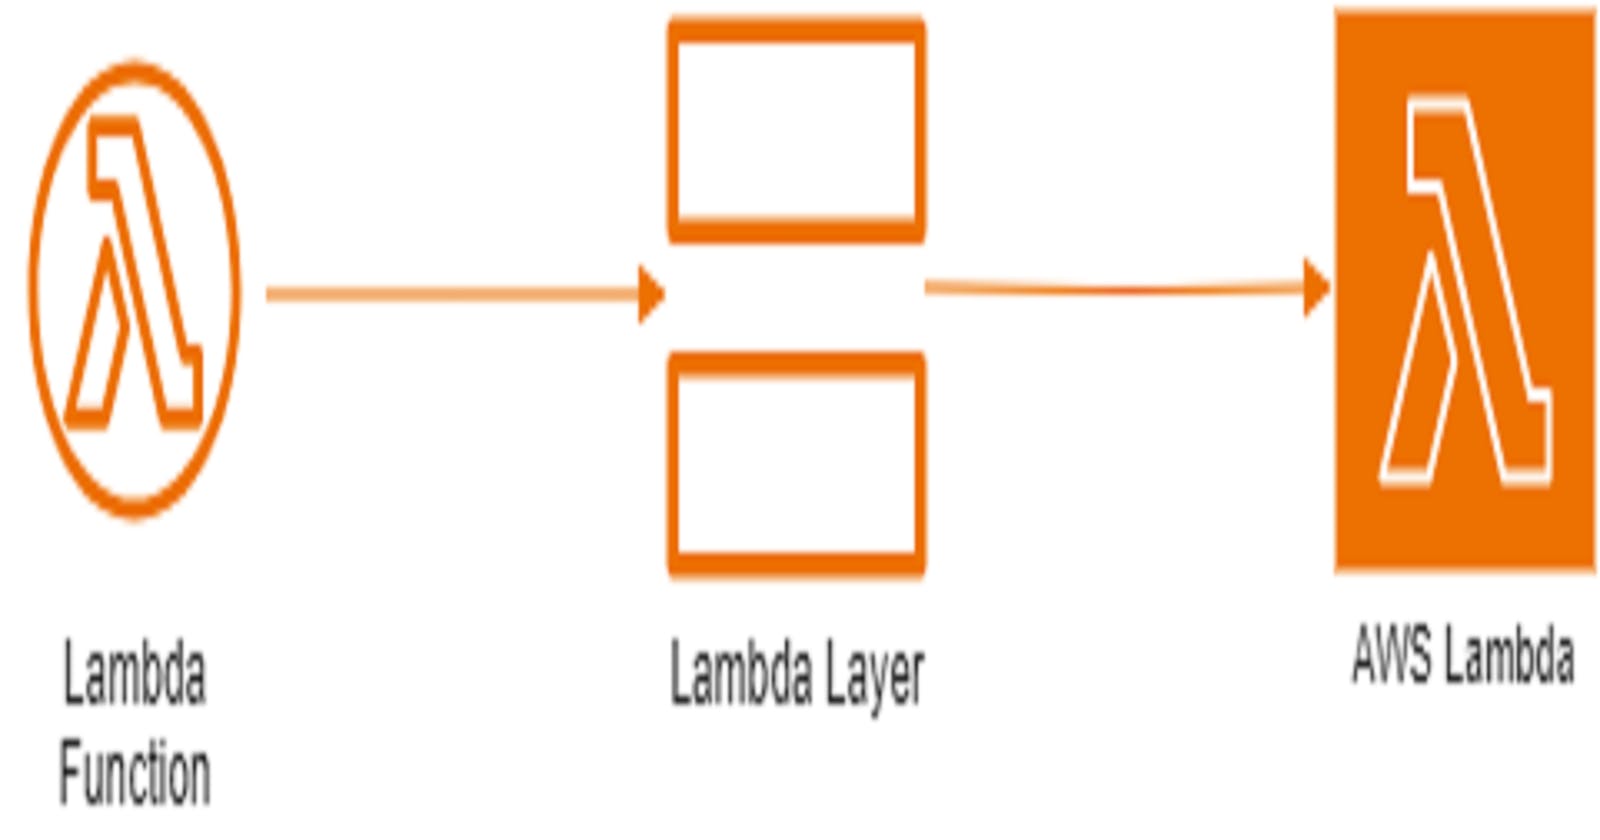 AWS Lambda: Packaging a Layer